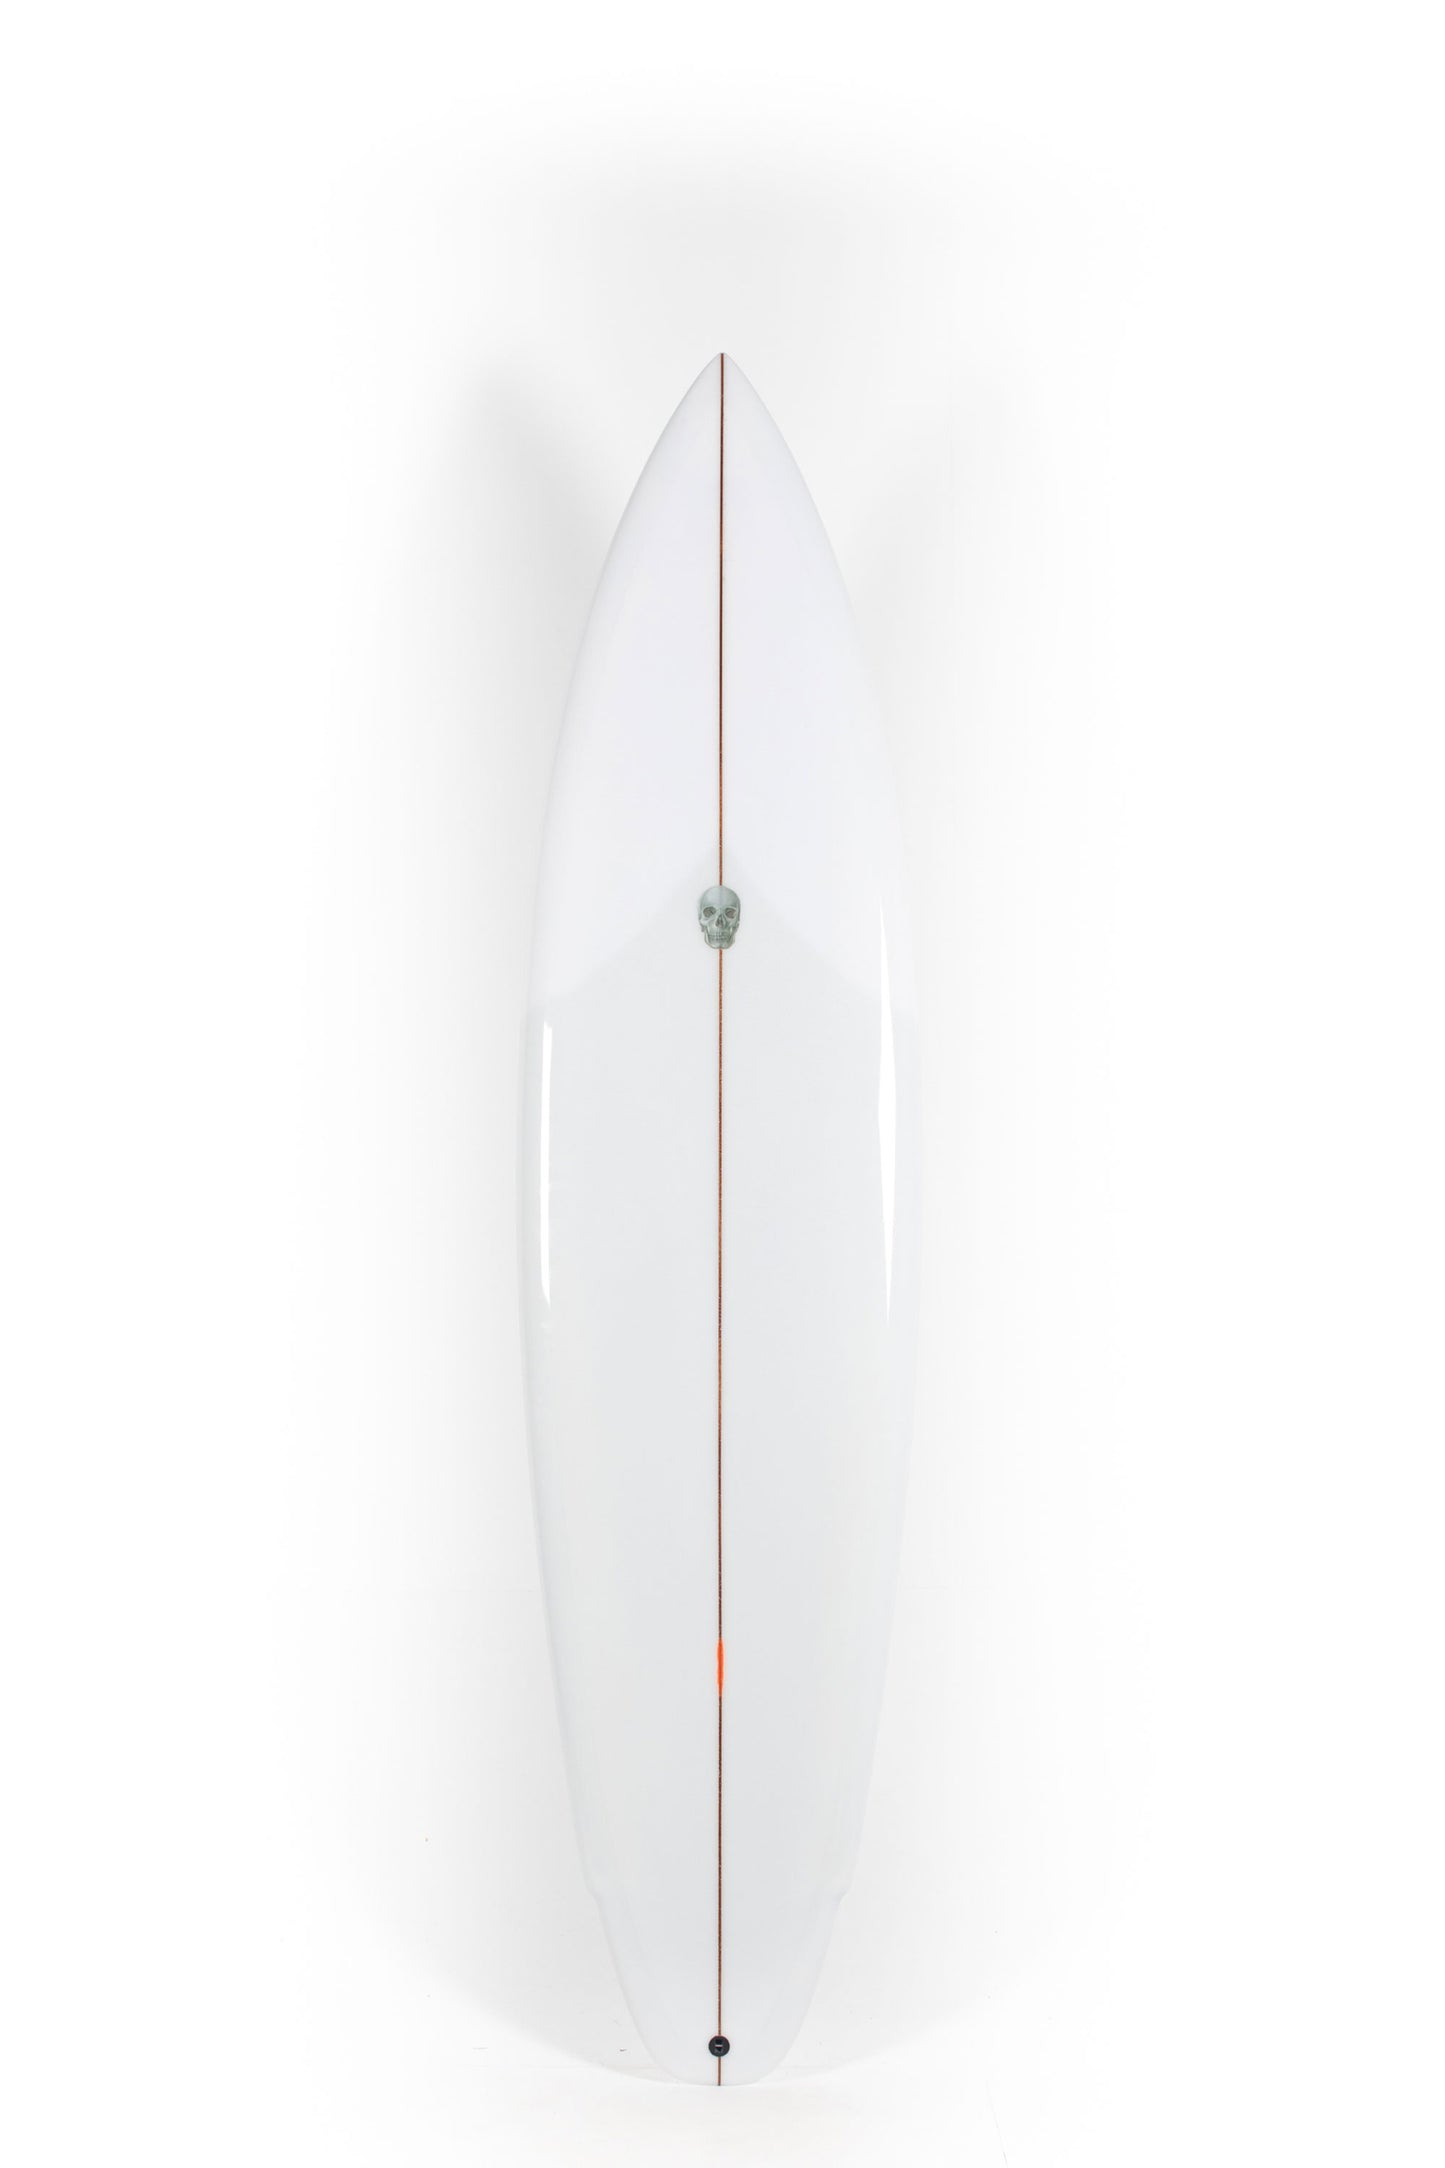 Pukas Surf Shop - Christenson Surfboards - LANE SPLITTER MID- 7'6" x 21 5/16 x 2 7/8 - CX04028